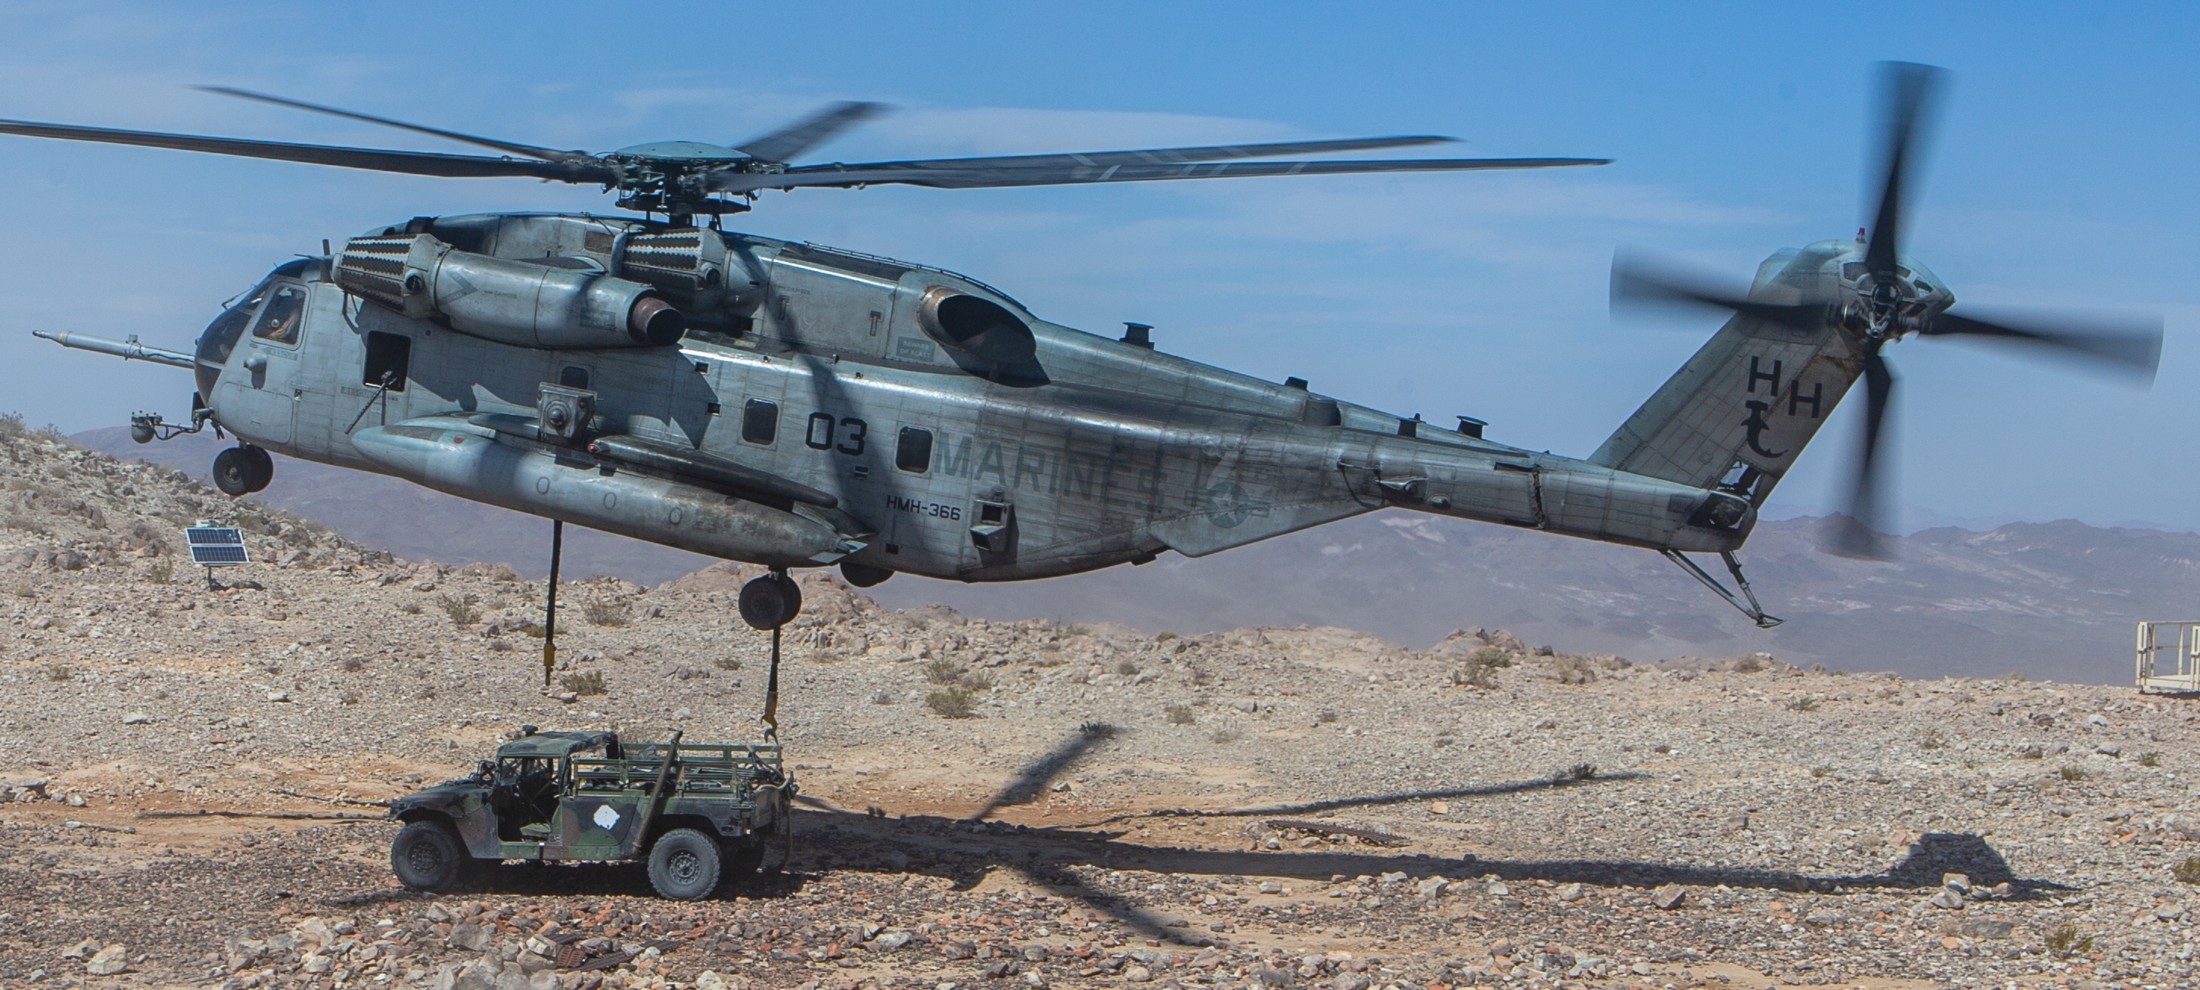 hmh-366 hammerheads marine heavy helicopter squadron usmc sikorsky ch-53e super stallion 117 29 palms california